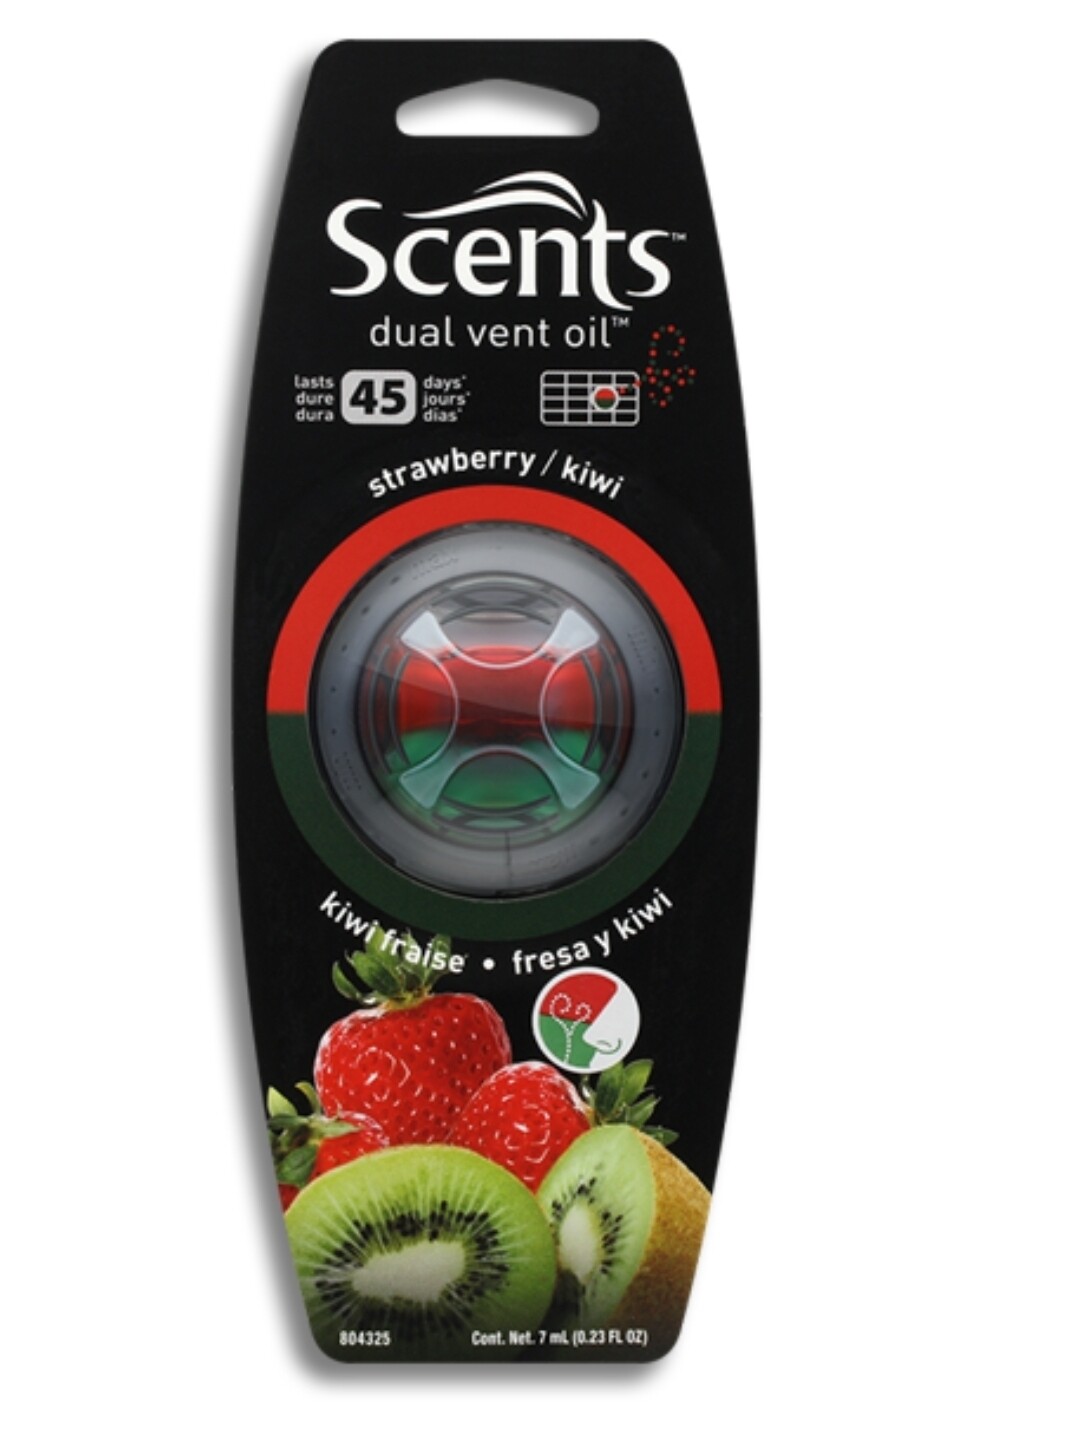 Scents Automotive Vent Fresh Air Freshener: strawberry kiwi